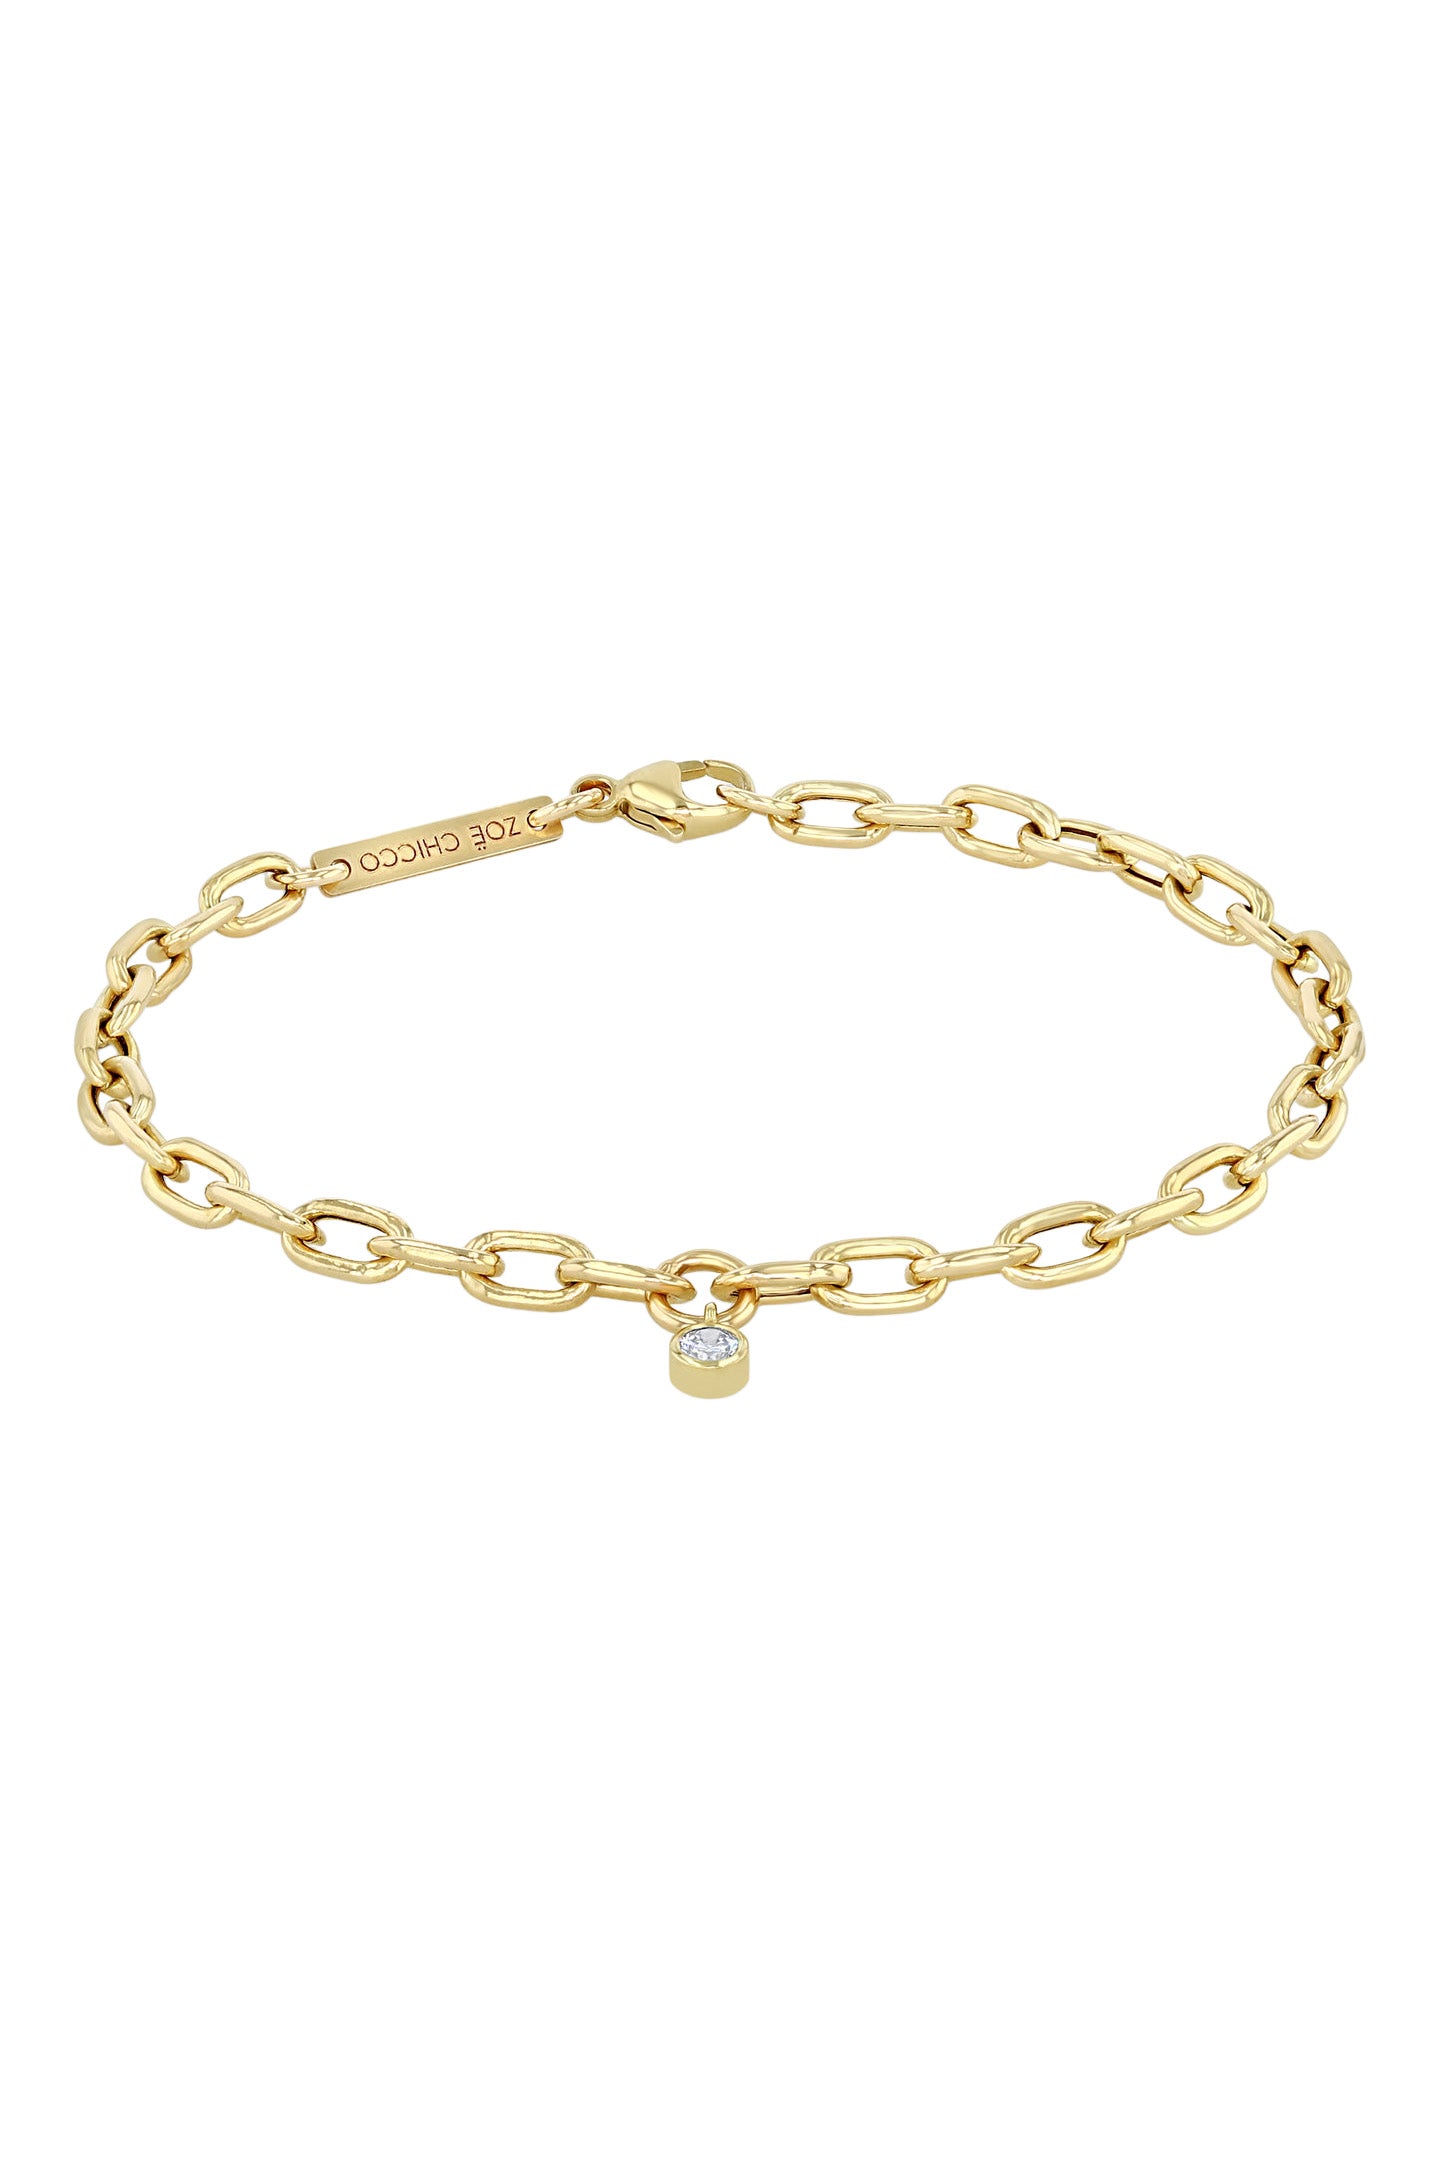 Zoe Chicco Medium Square Oval Link Dangling Diamond Bezel Bracelet in 14k Yellow Gold